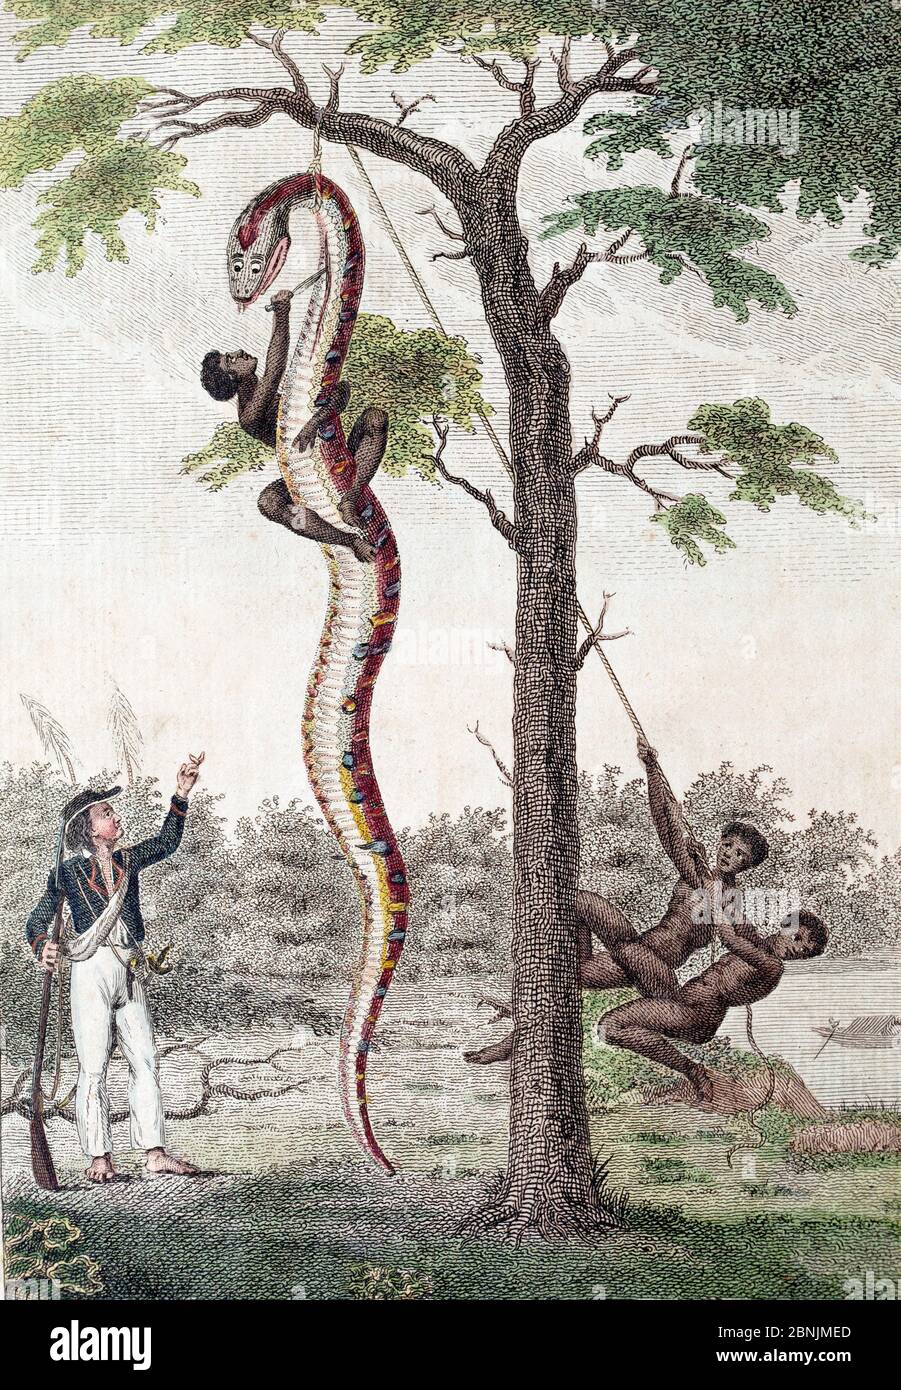 Illustration 'Skinning of the Aboma Snake', J. G. Stedman, Narrative (1796), the plate designed by Stedman and originally engraved by Blake shows slav Stock Photo